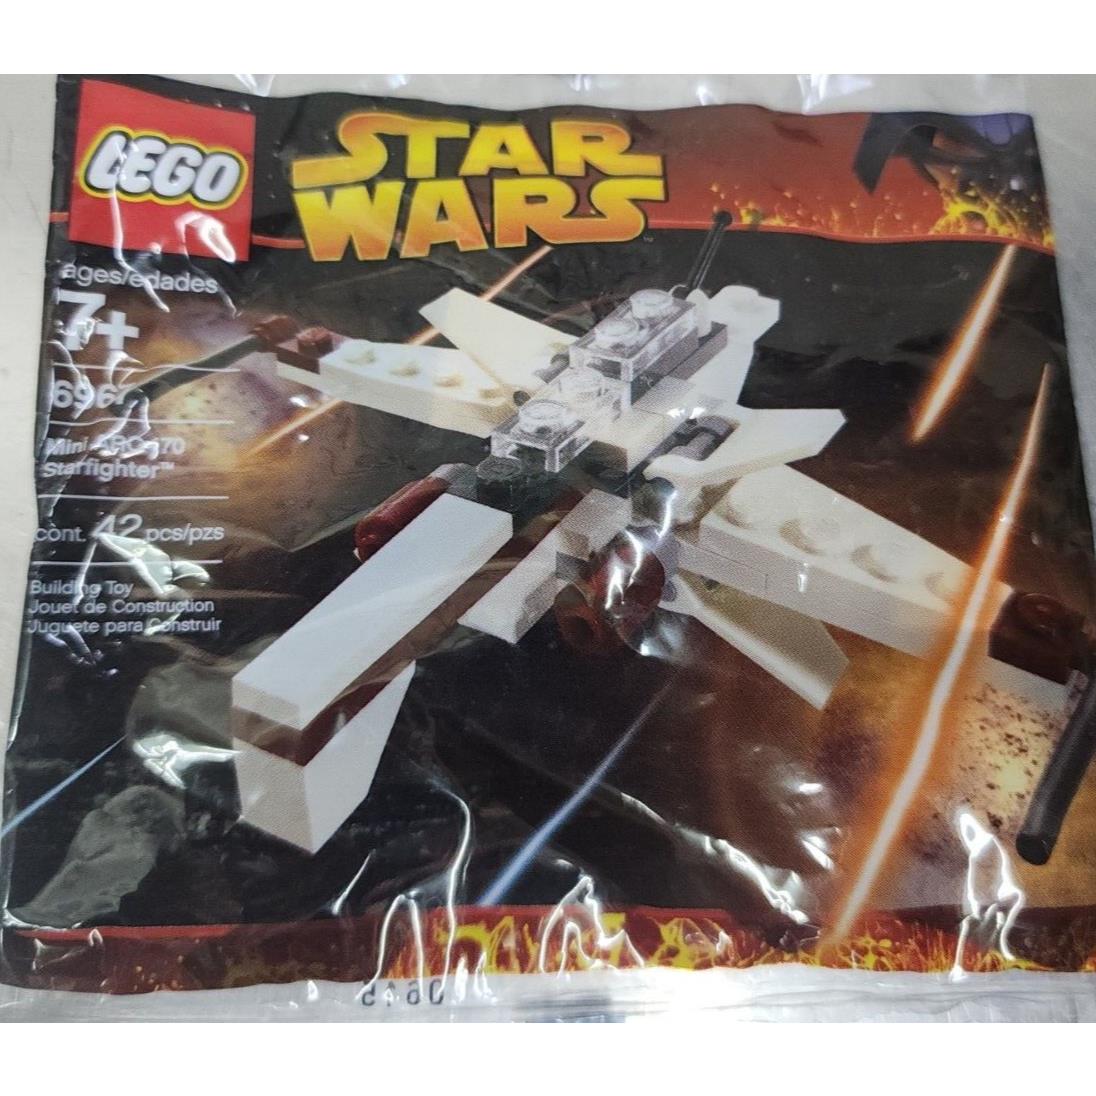 Lego Star Wars: Arc Fighter 6967 . Lego Star Wars The Inerceptor 6965